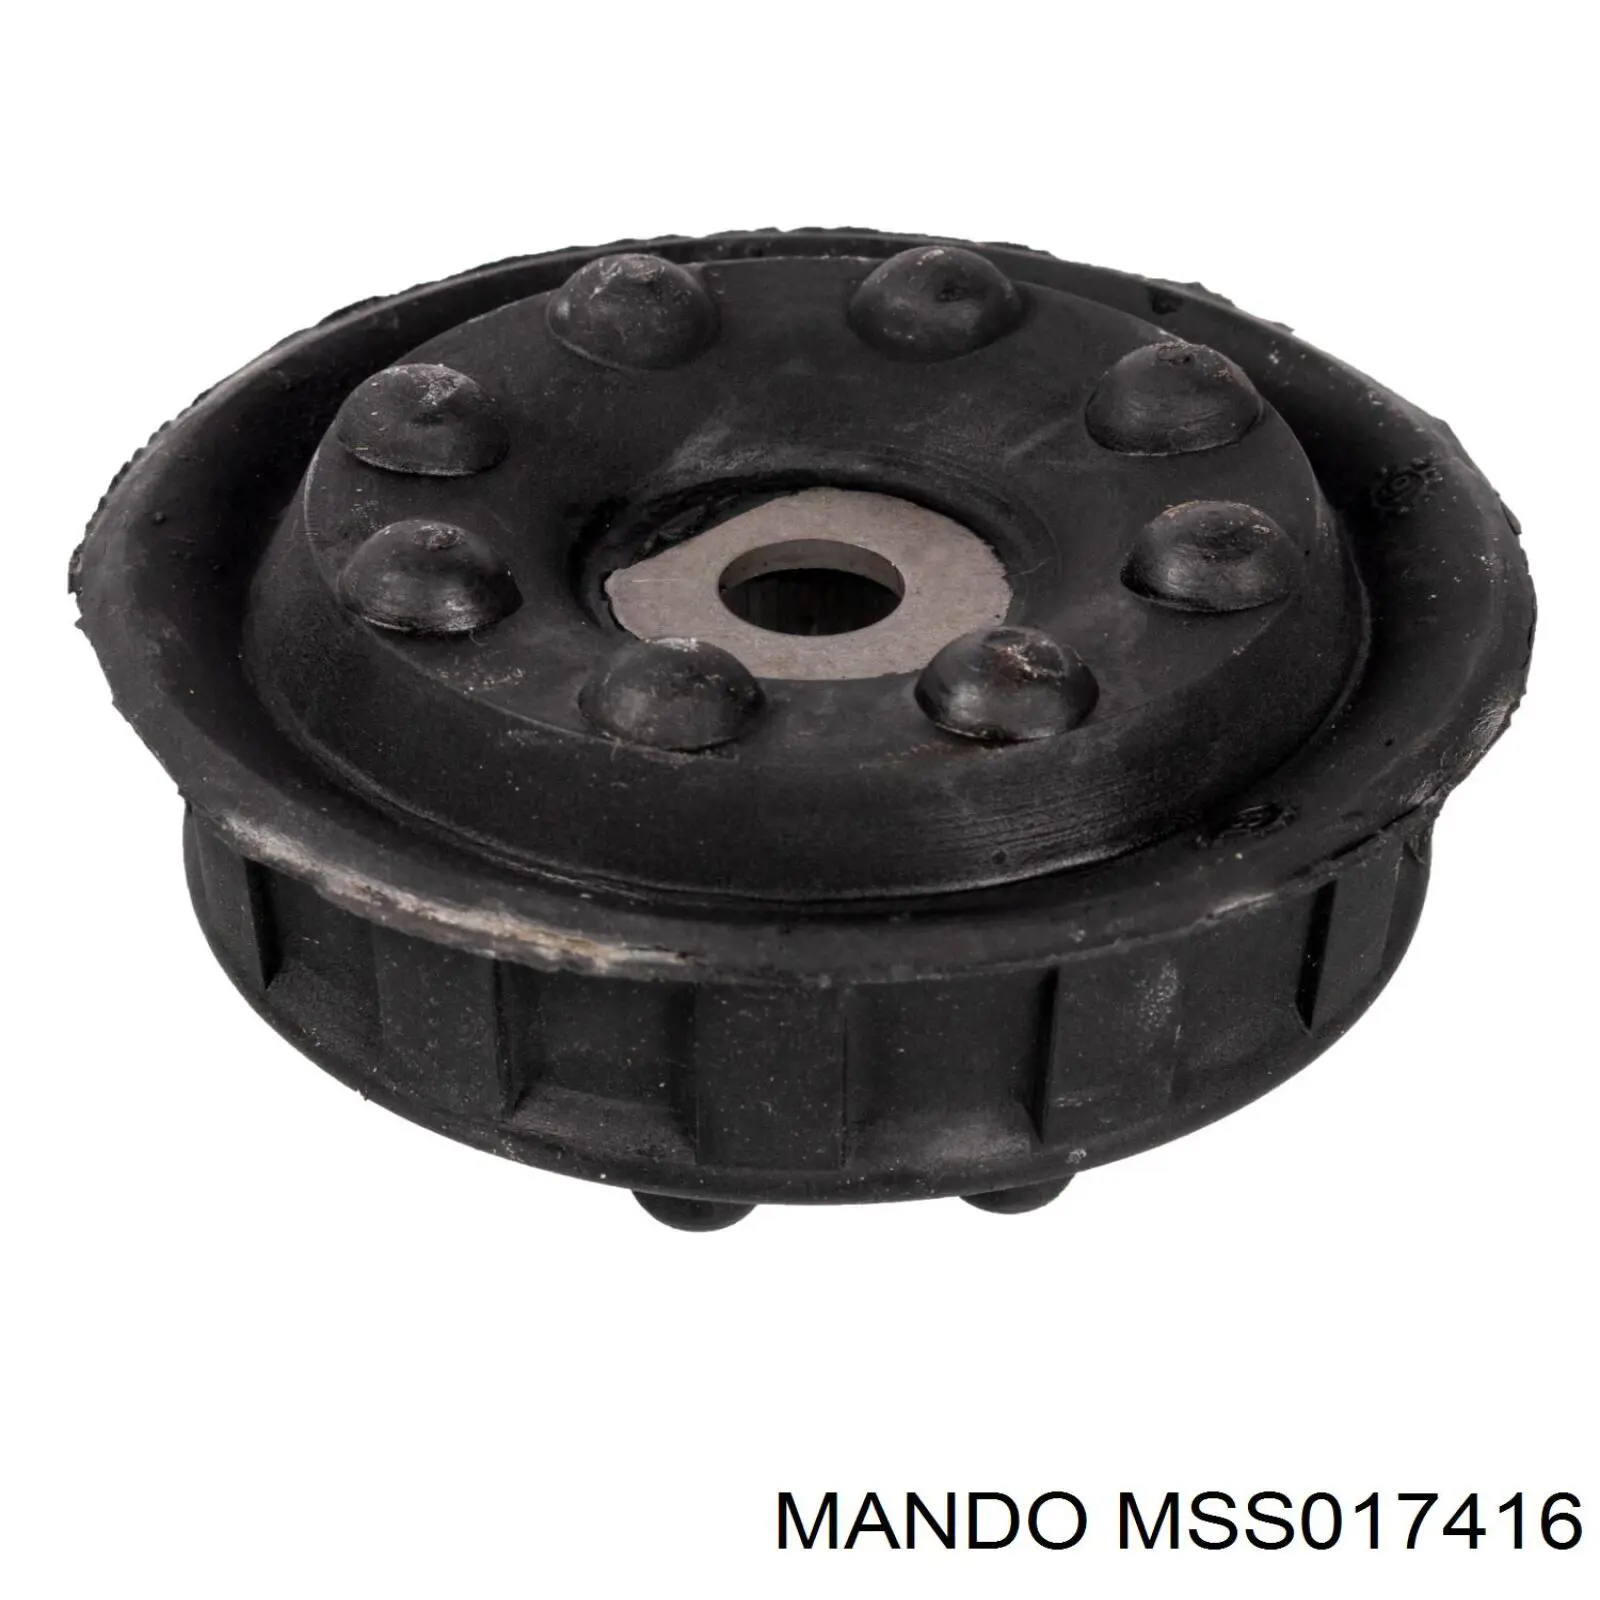 MSS017416 Mando амортизатор передний